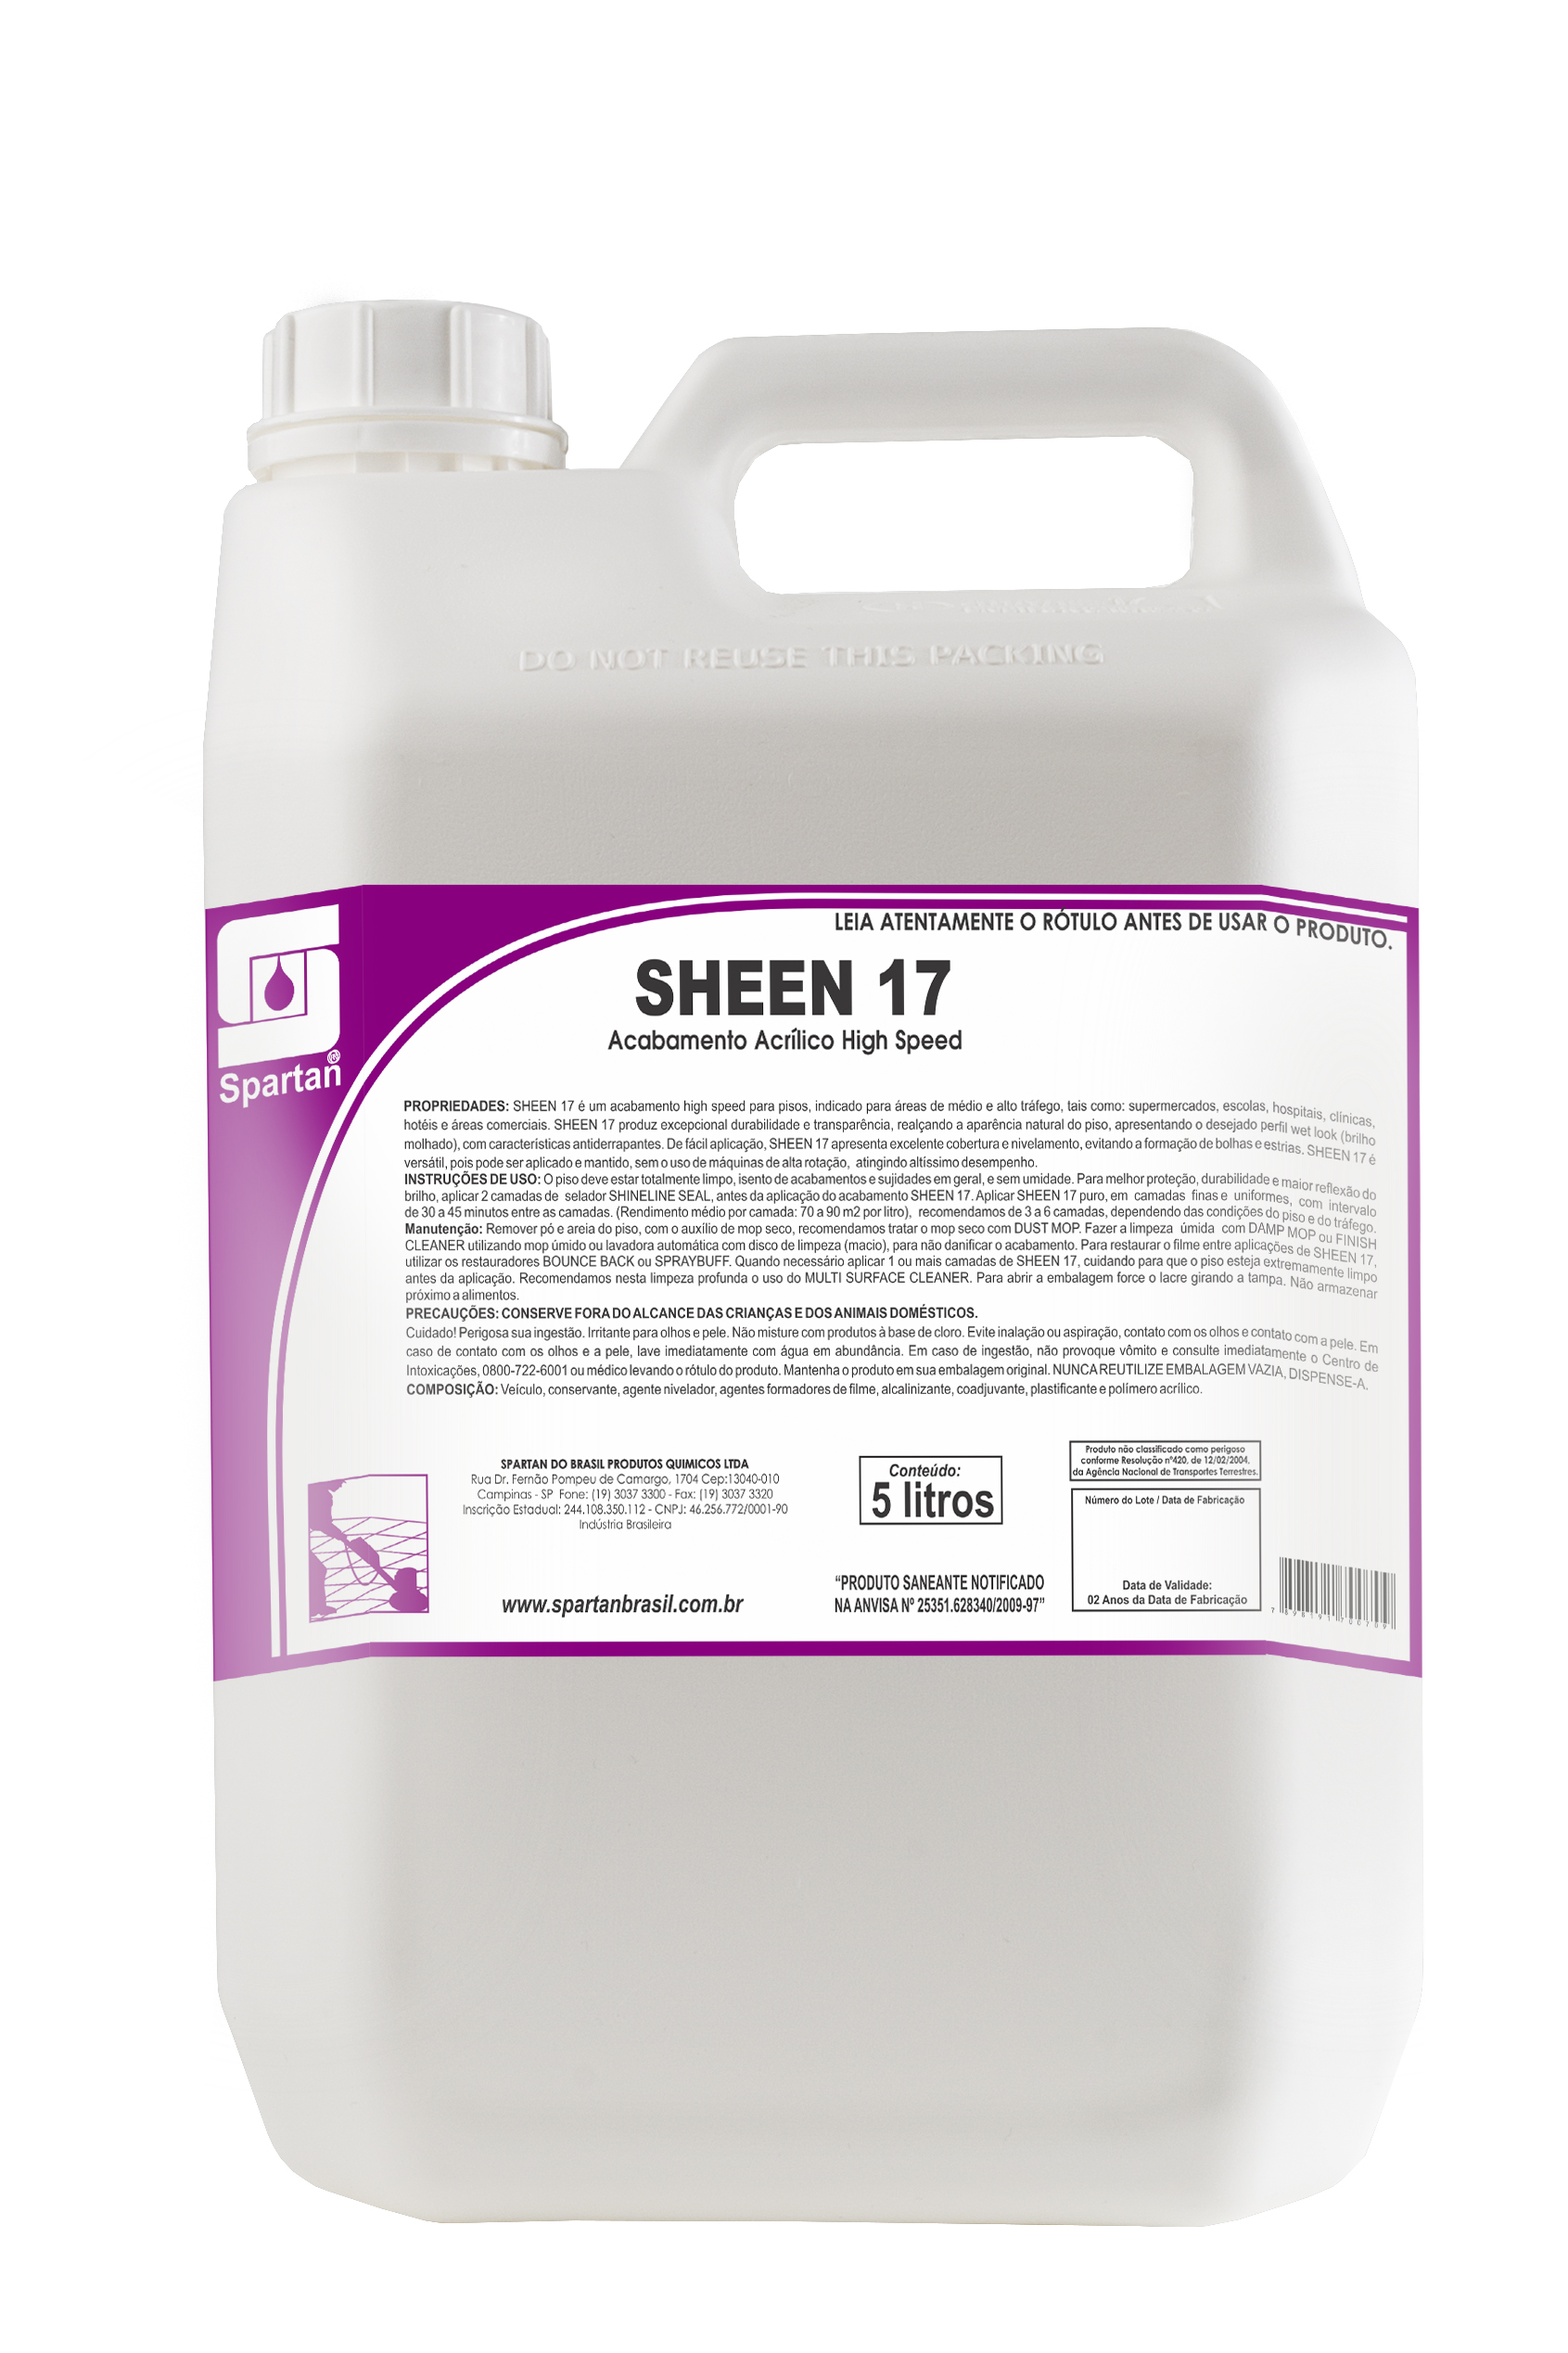 Imagem ilustrativa do produto: Sheen 17